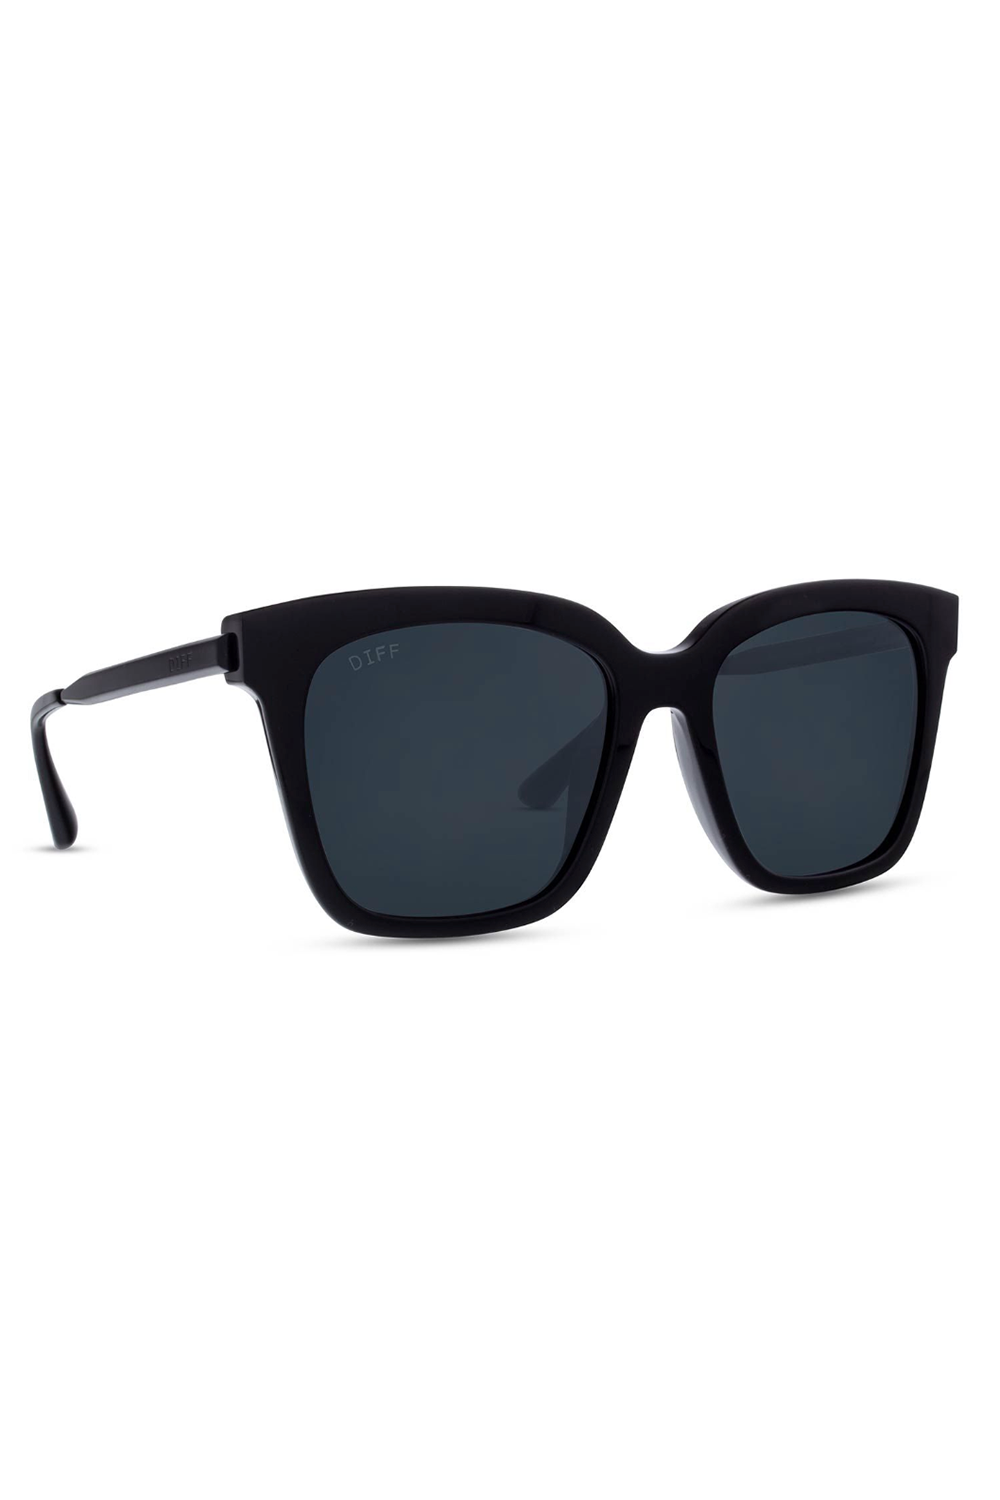 Bella Sunglasses - Black Grey Polarized